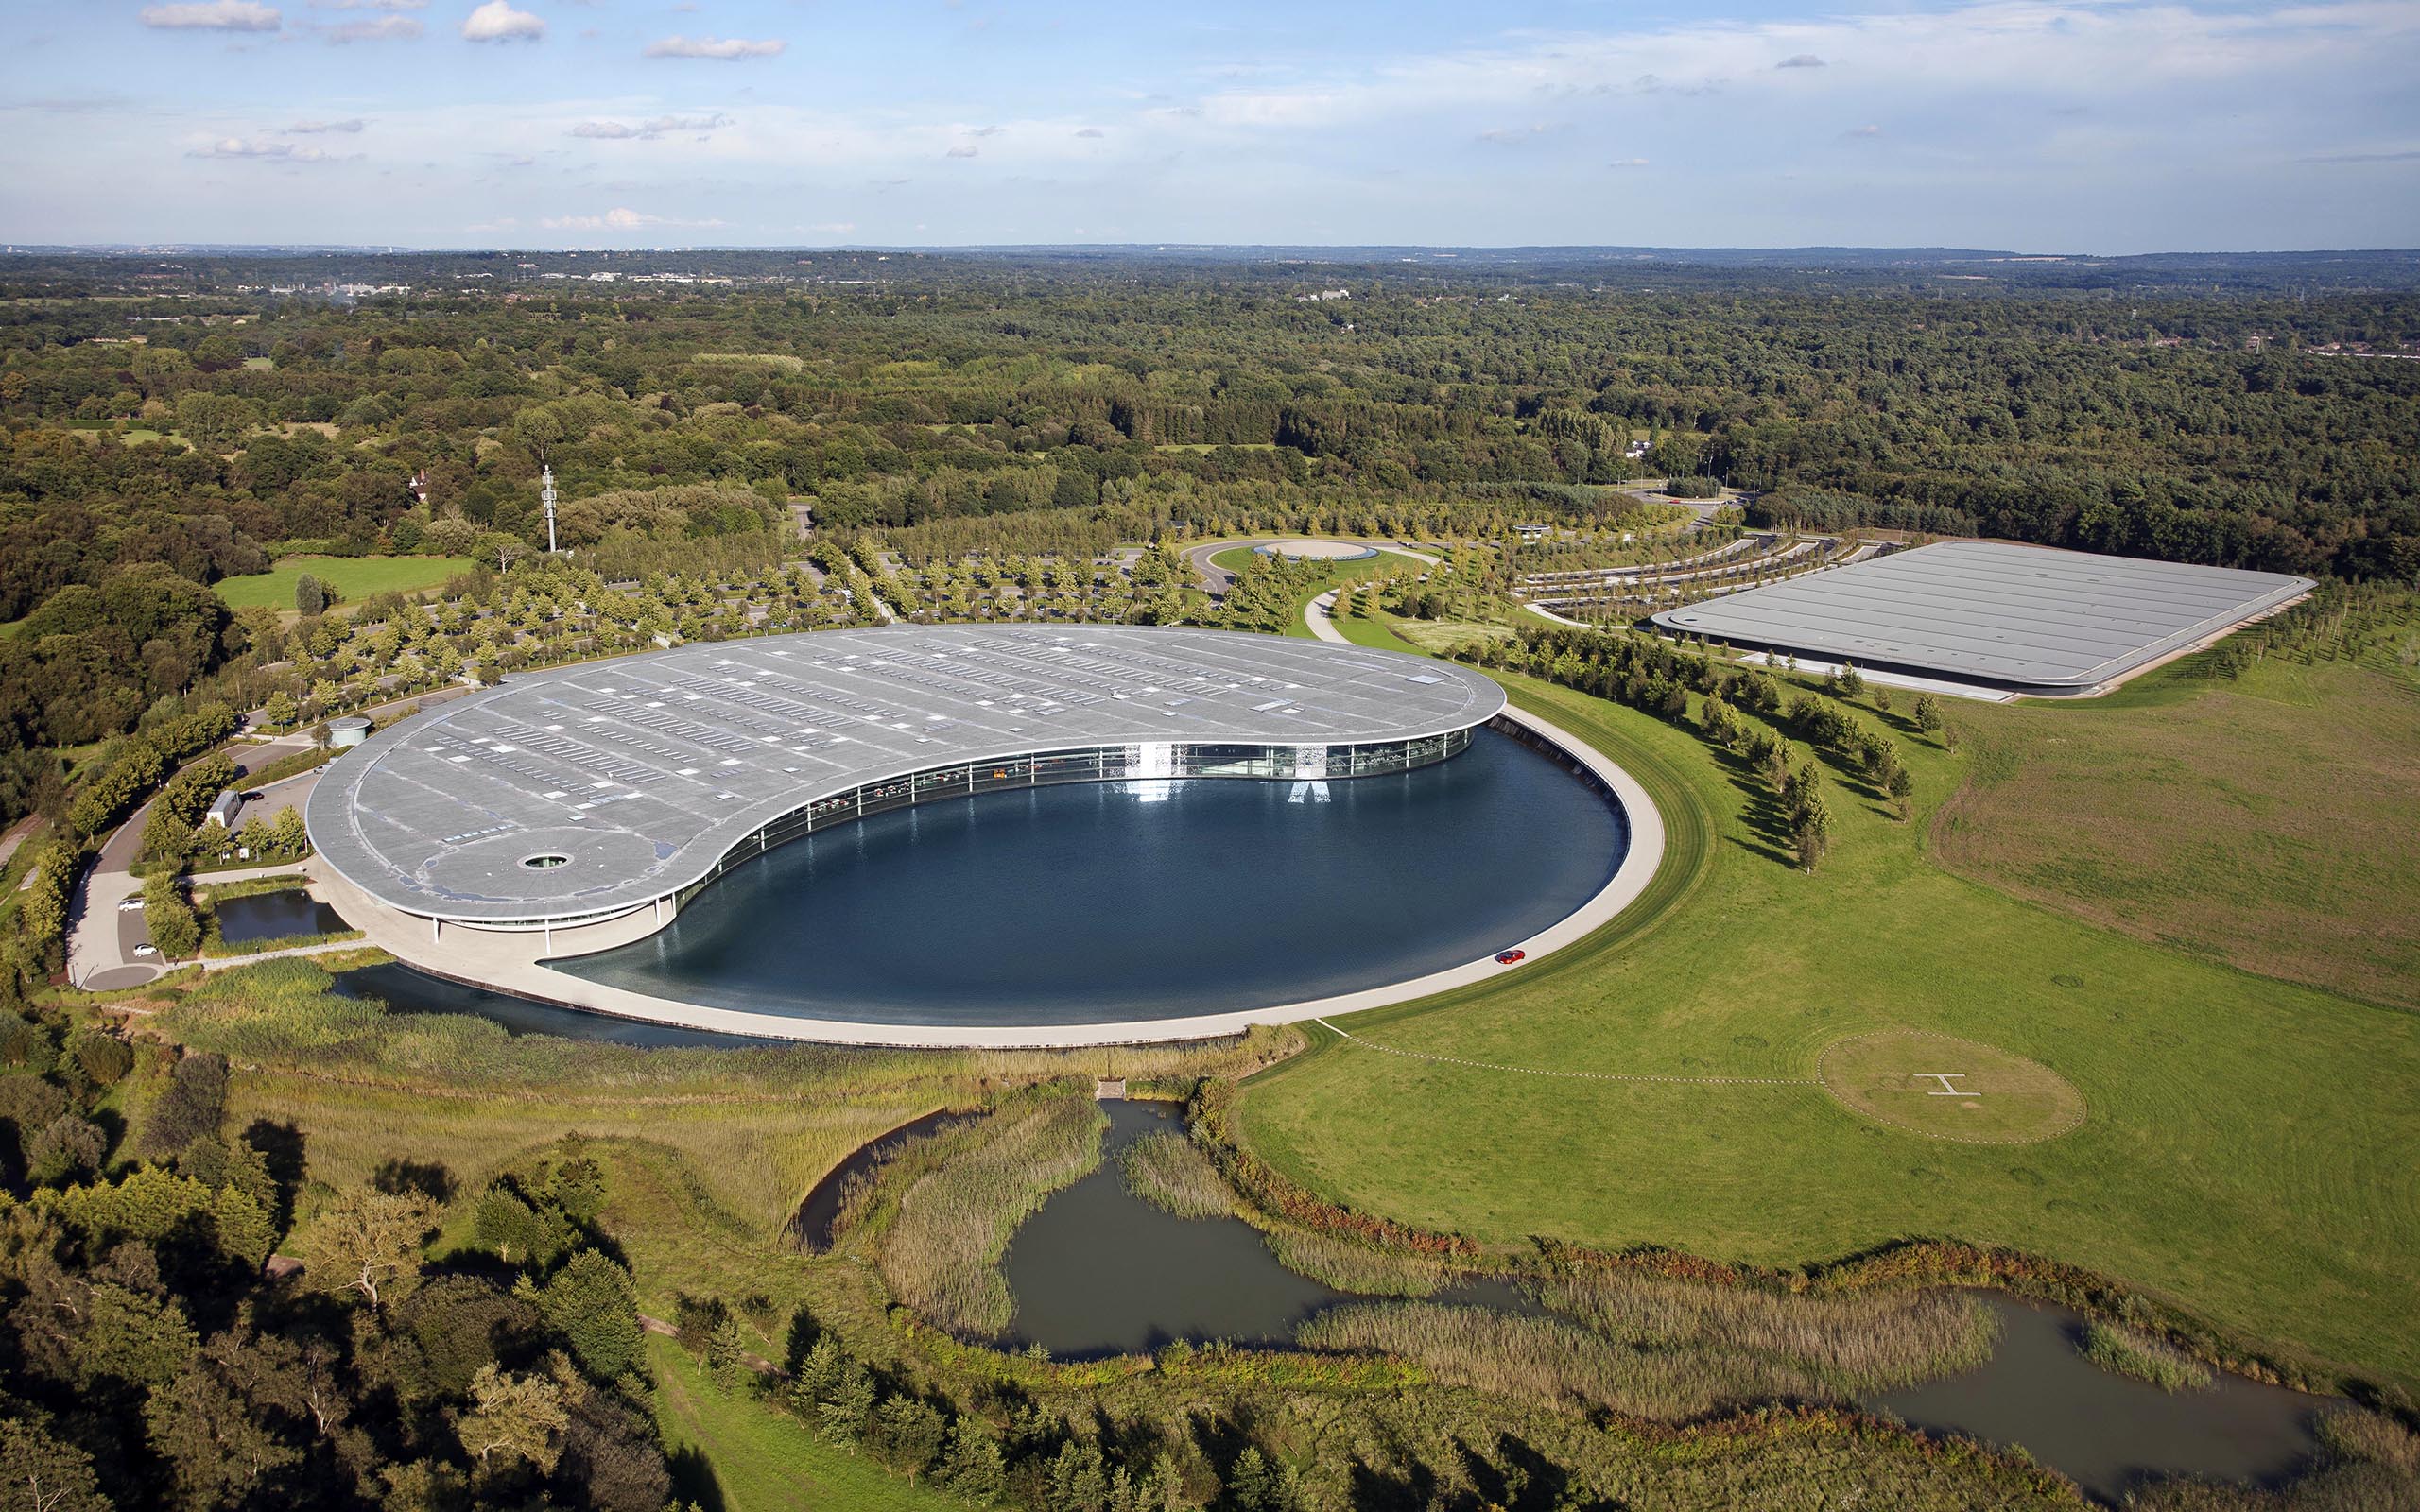 General 2560x1600 McLaren building nature landscape aerial view modern architecture technology factories England Taoism